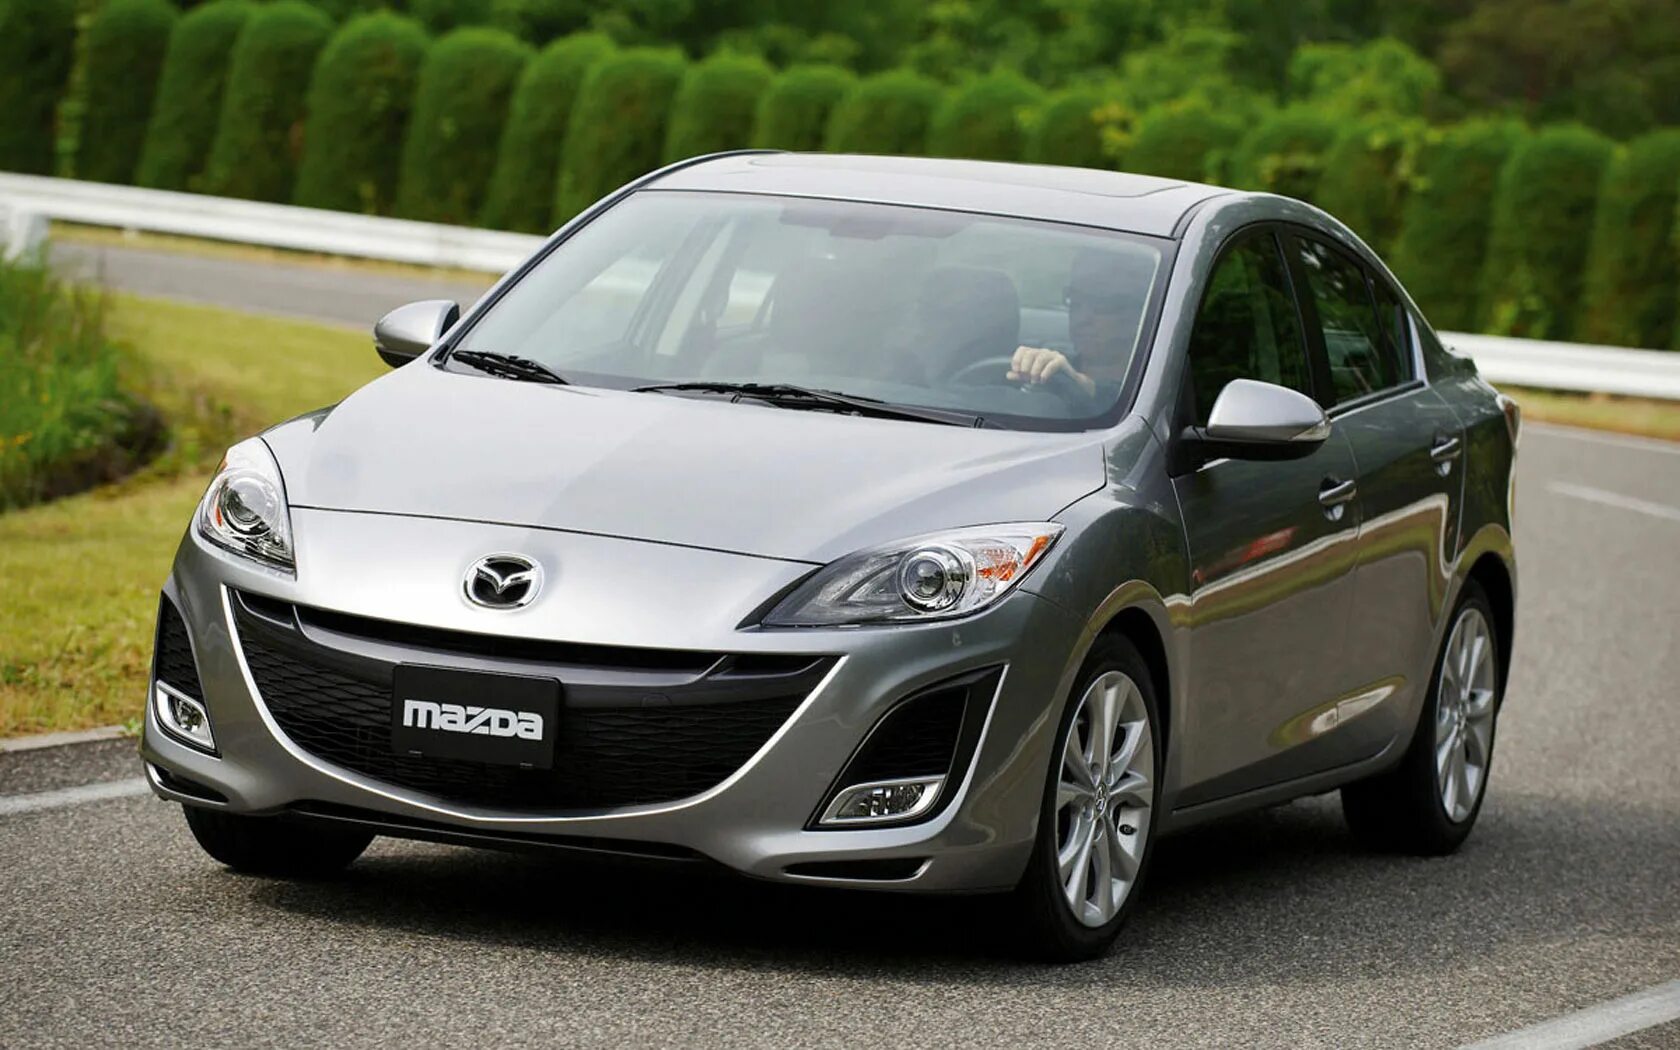 Mazda 3 2010. Mazda 3 BL 2010. Мазда 3 седан 2010. Мазда 3 2 поколение седан. Мазда 3 bl 2011